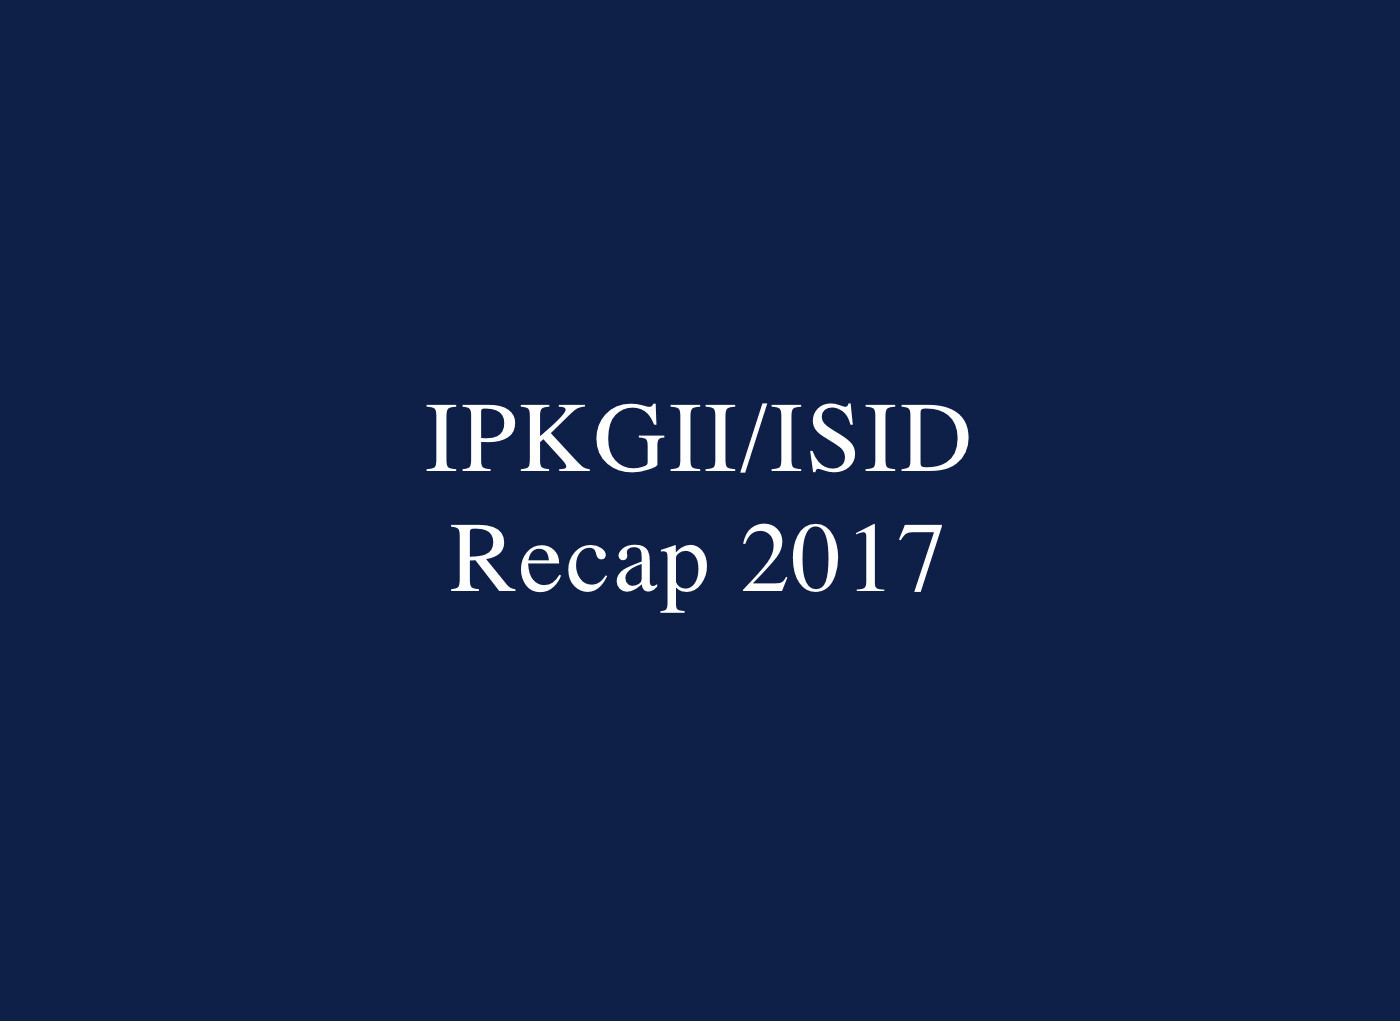 IPKGII/ISID Recap 2017